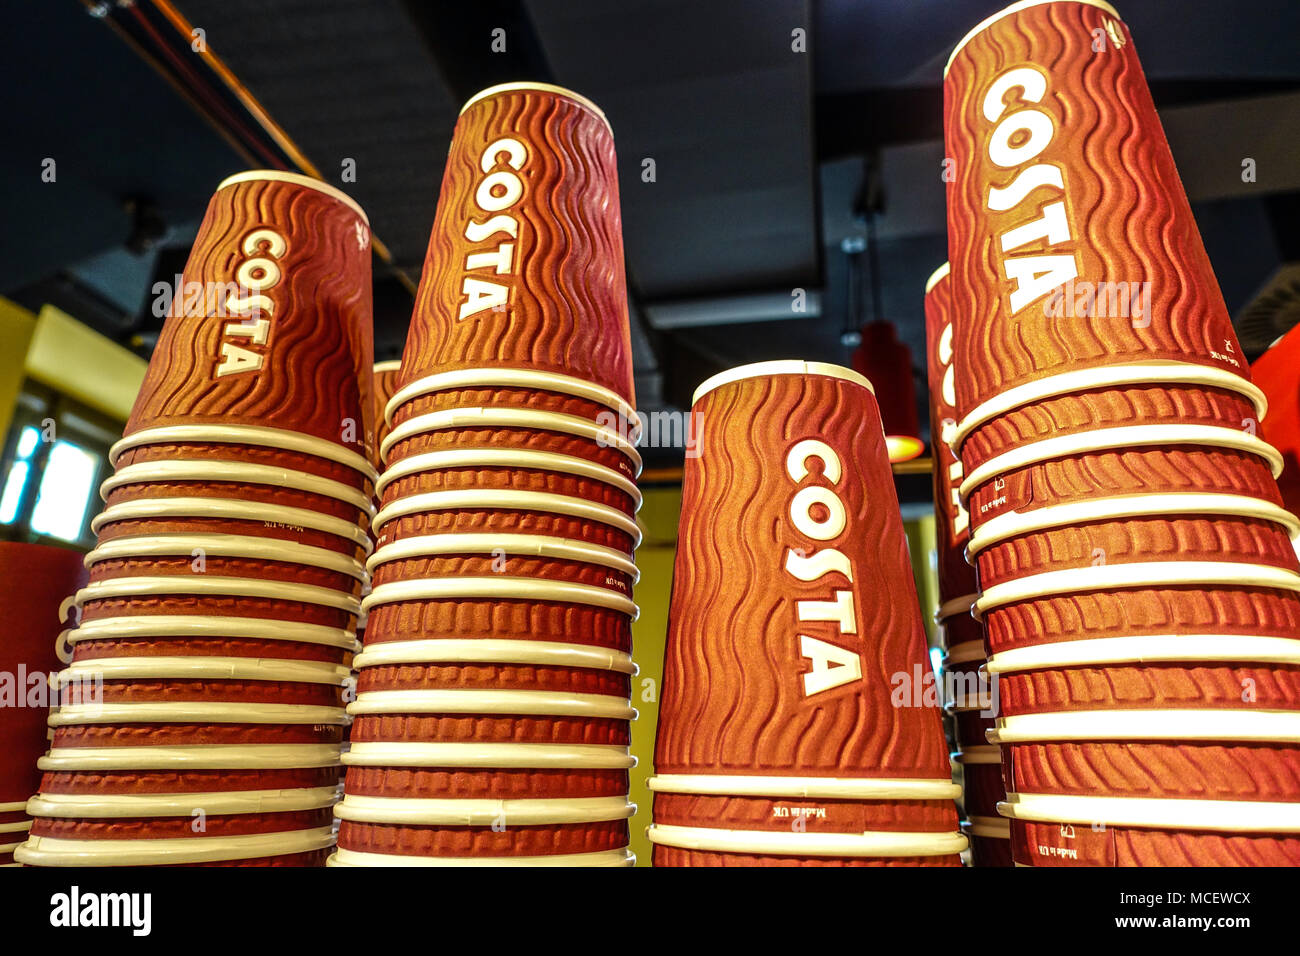 Costa coffee cups Stock Photo